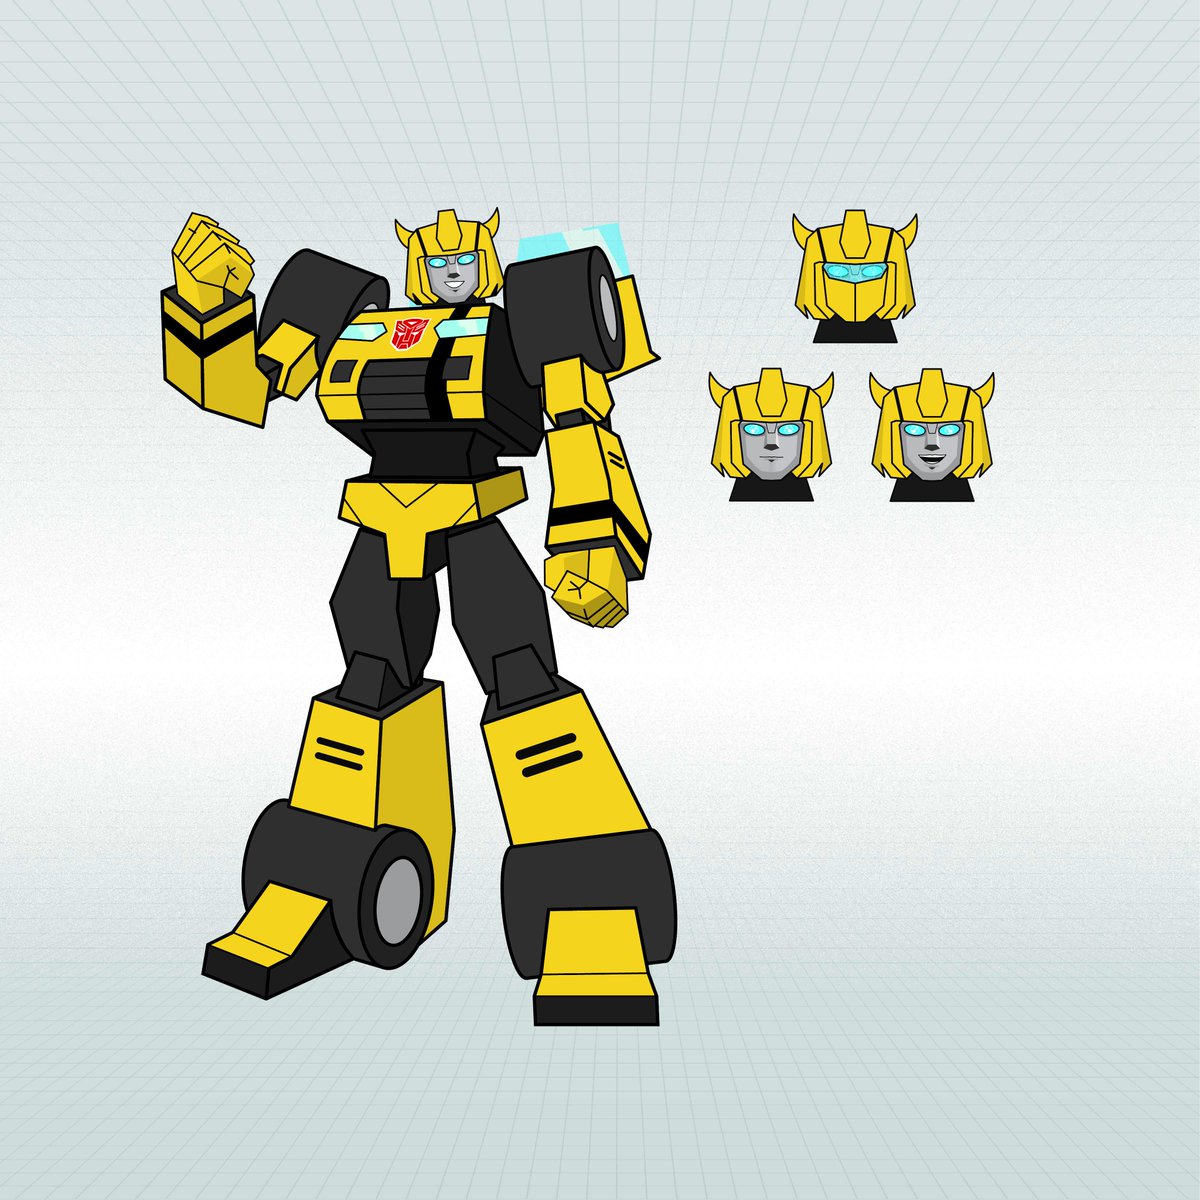 It's Bumblebee.
#Transformers #transformersart #transformersfanart #bumblebee